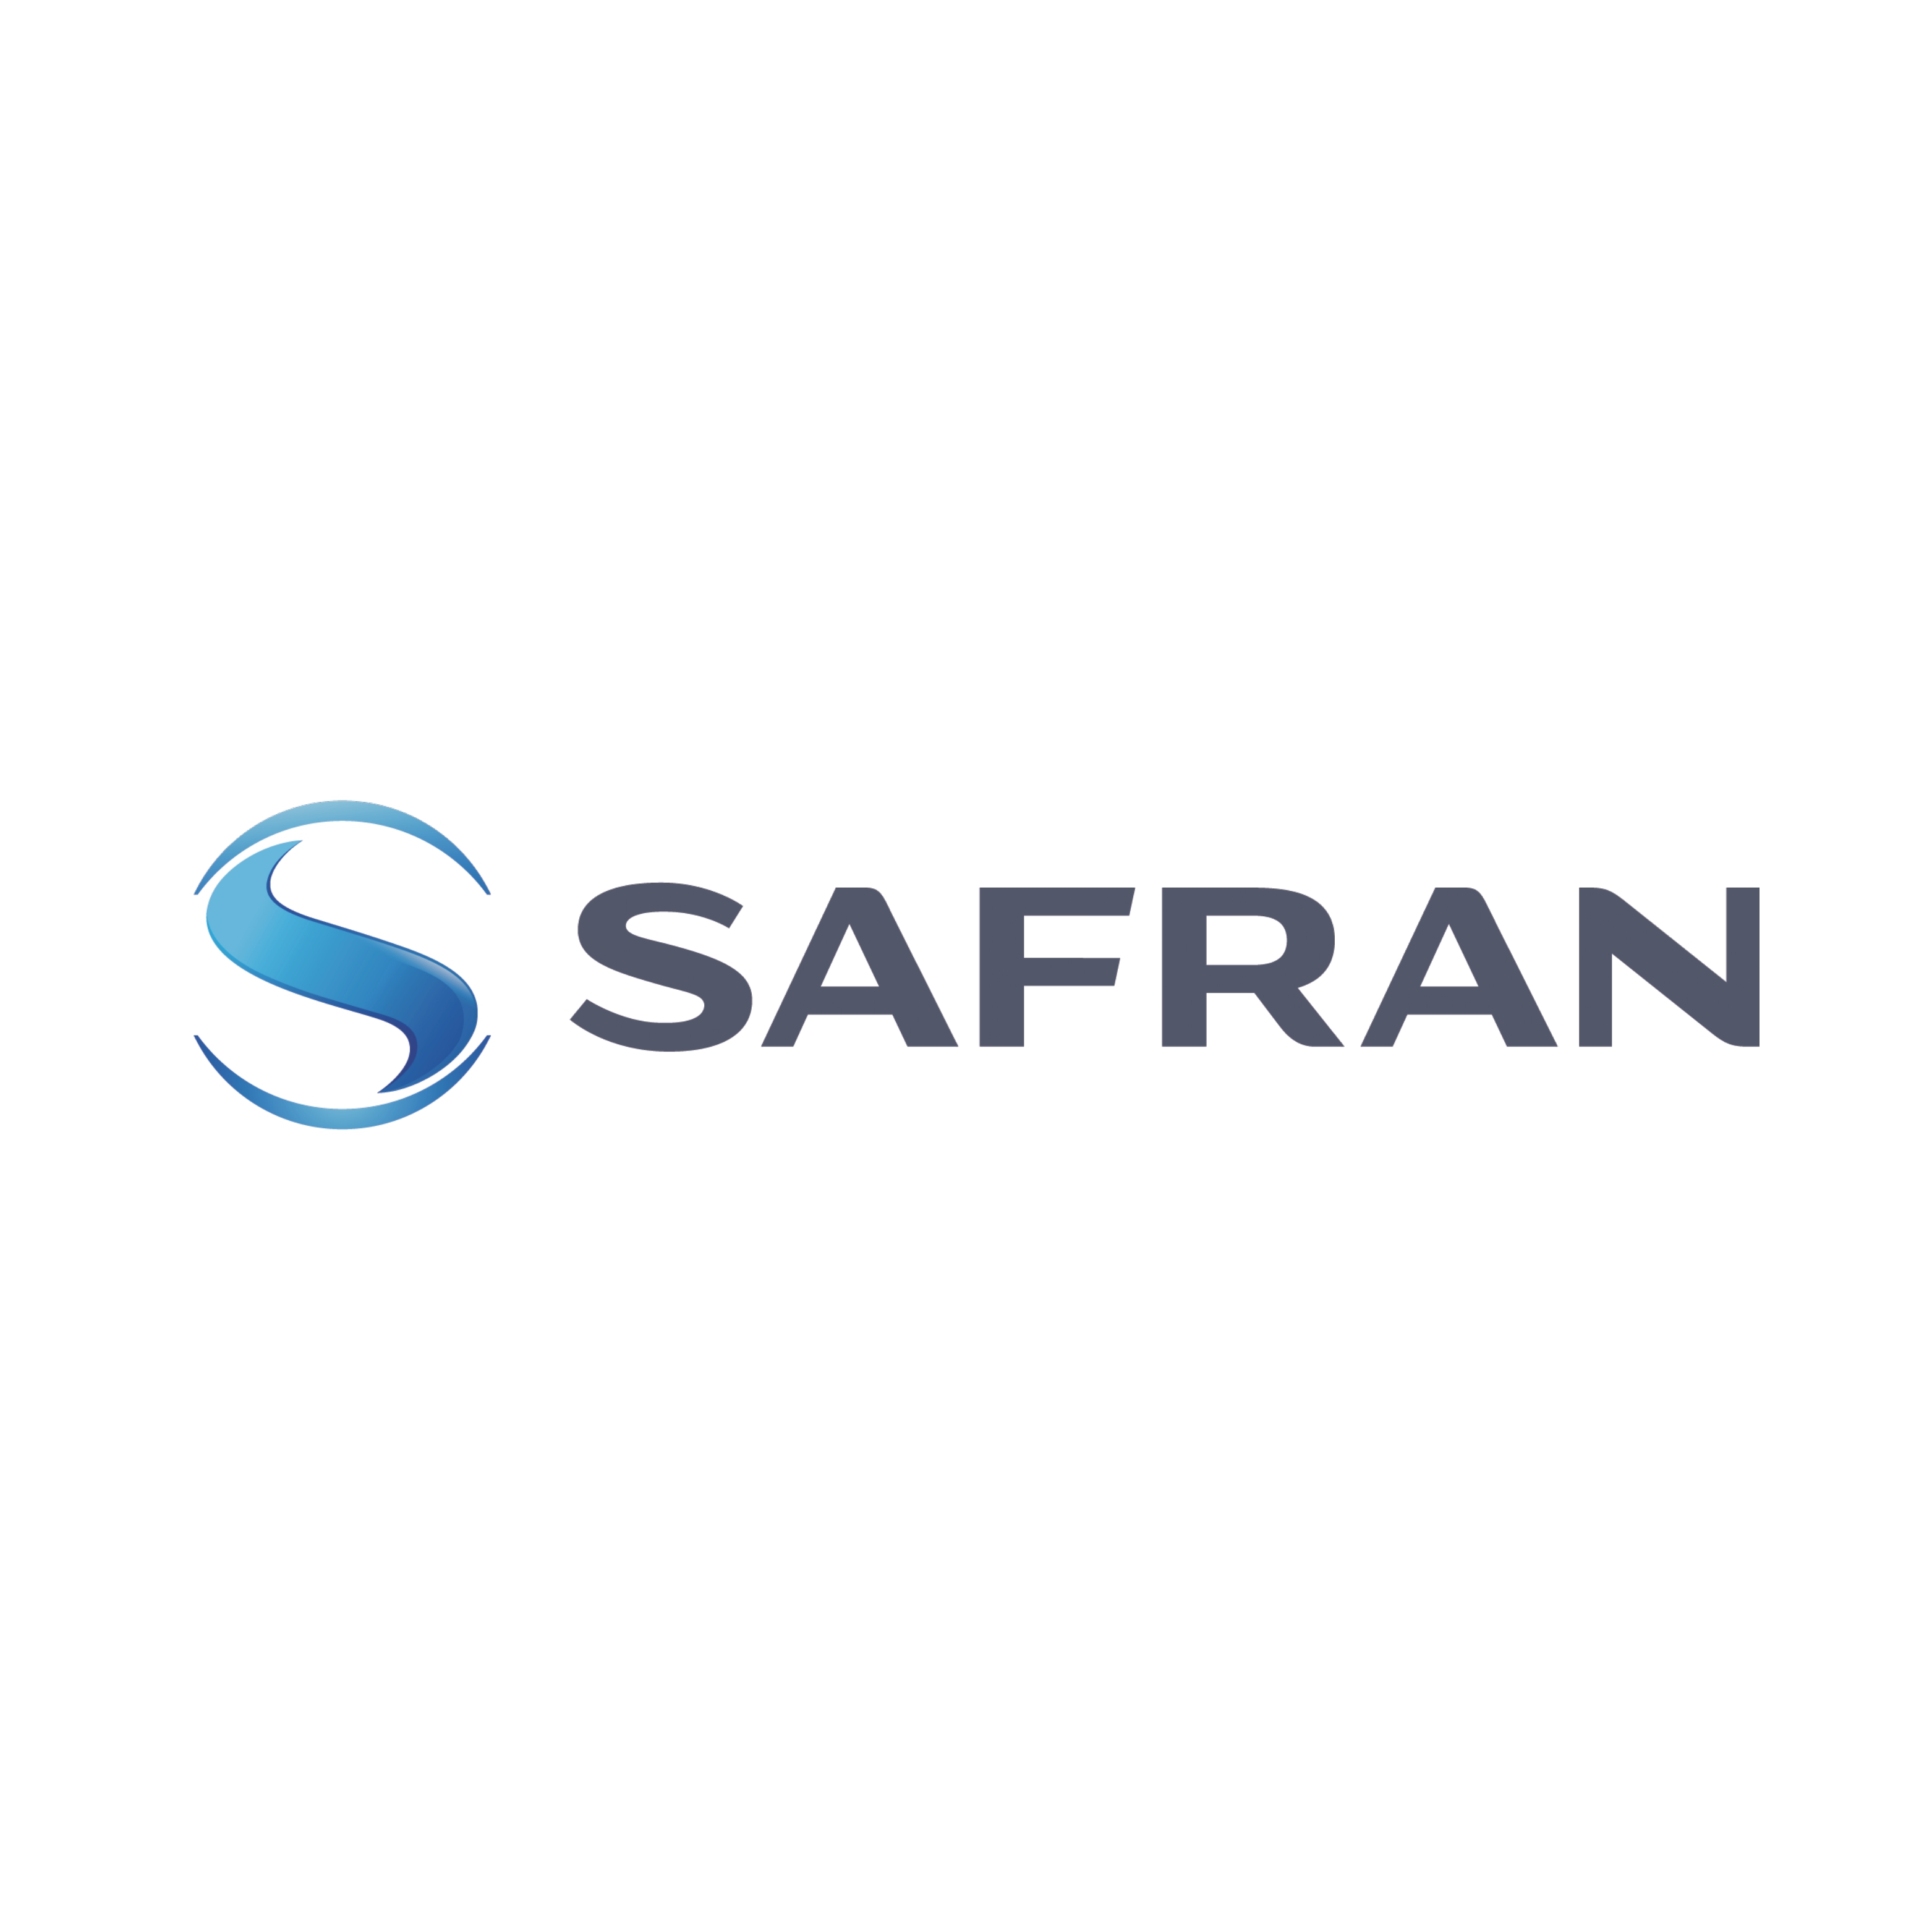 Safran Electronics & Defense